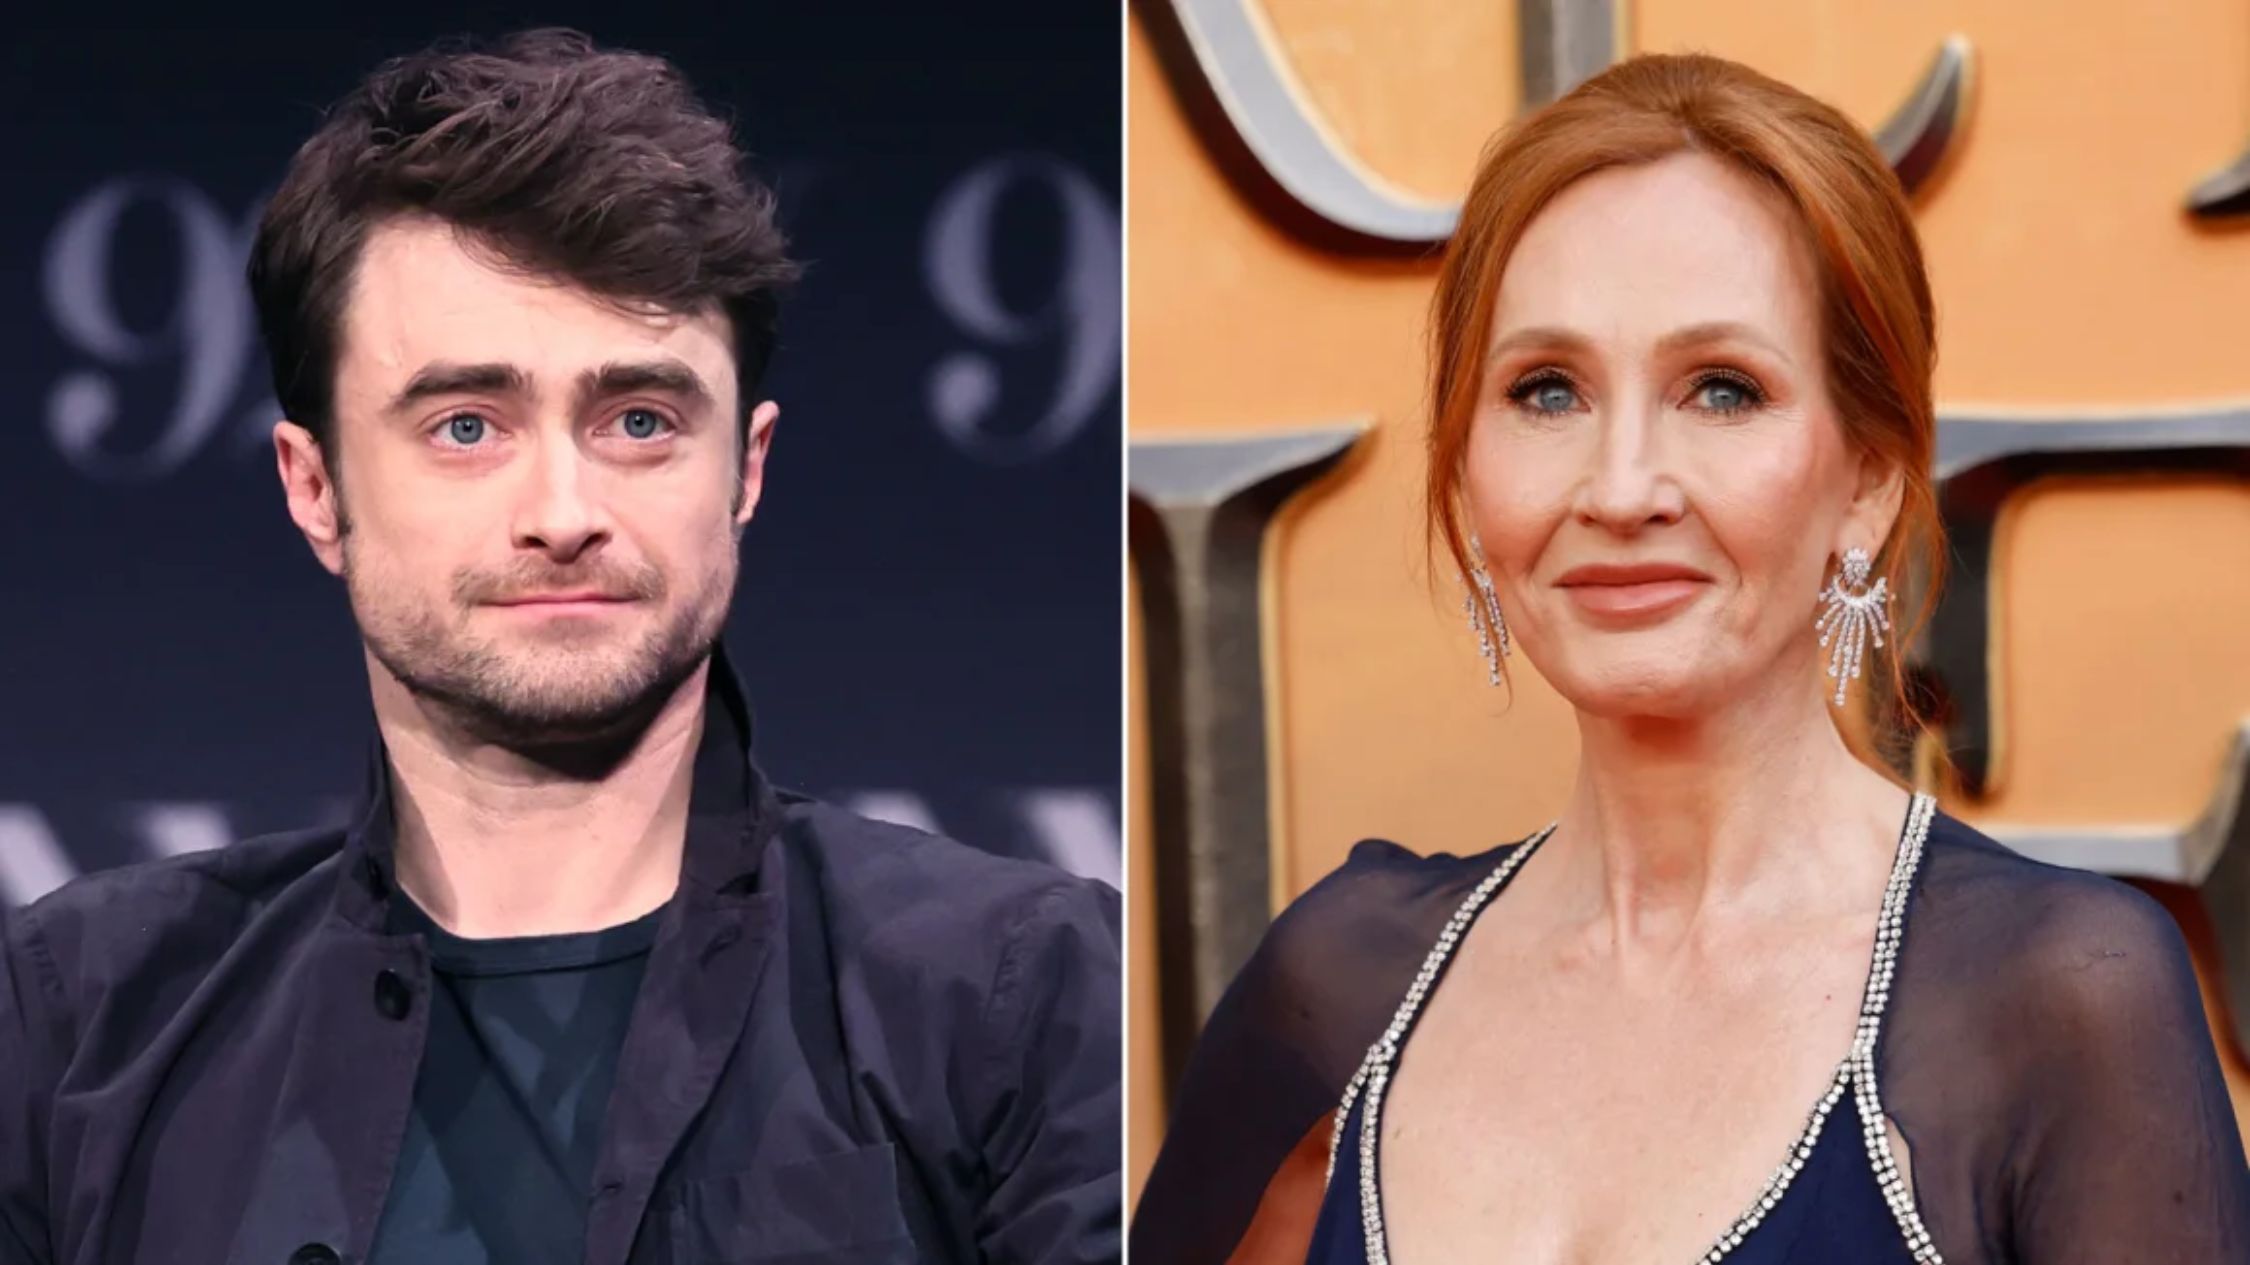 Daniel Radcliffe dice estar “muy triste” por la retórica antitrans de J.K. Rowling